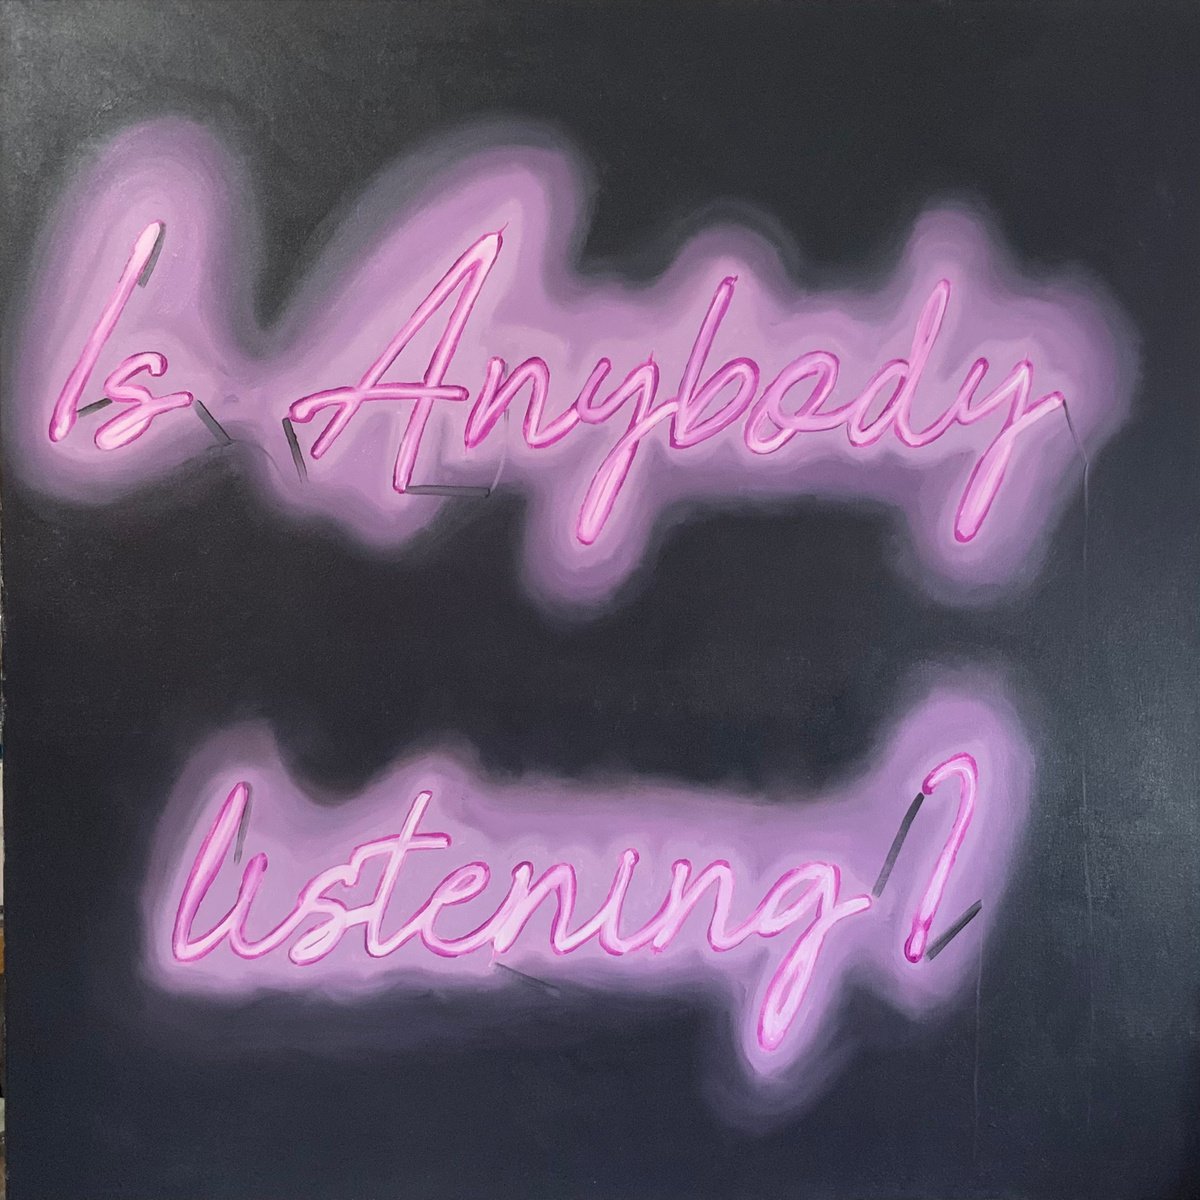 Is Anybody Listening? by Megan Cheetham